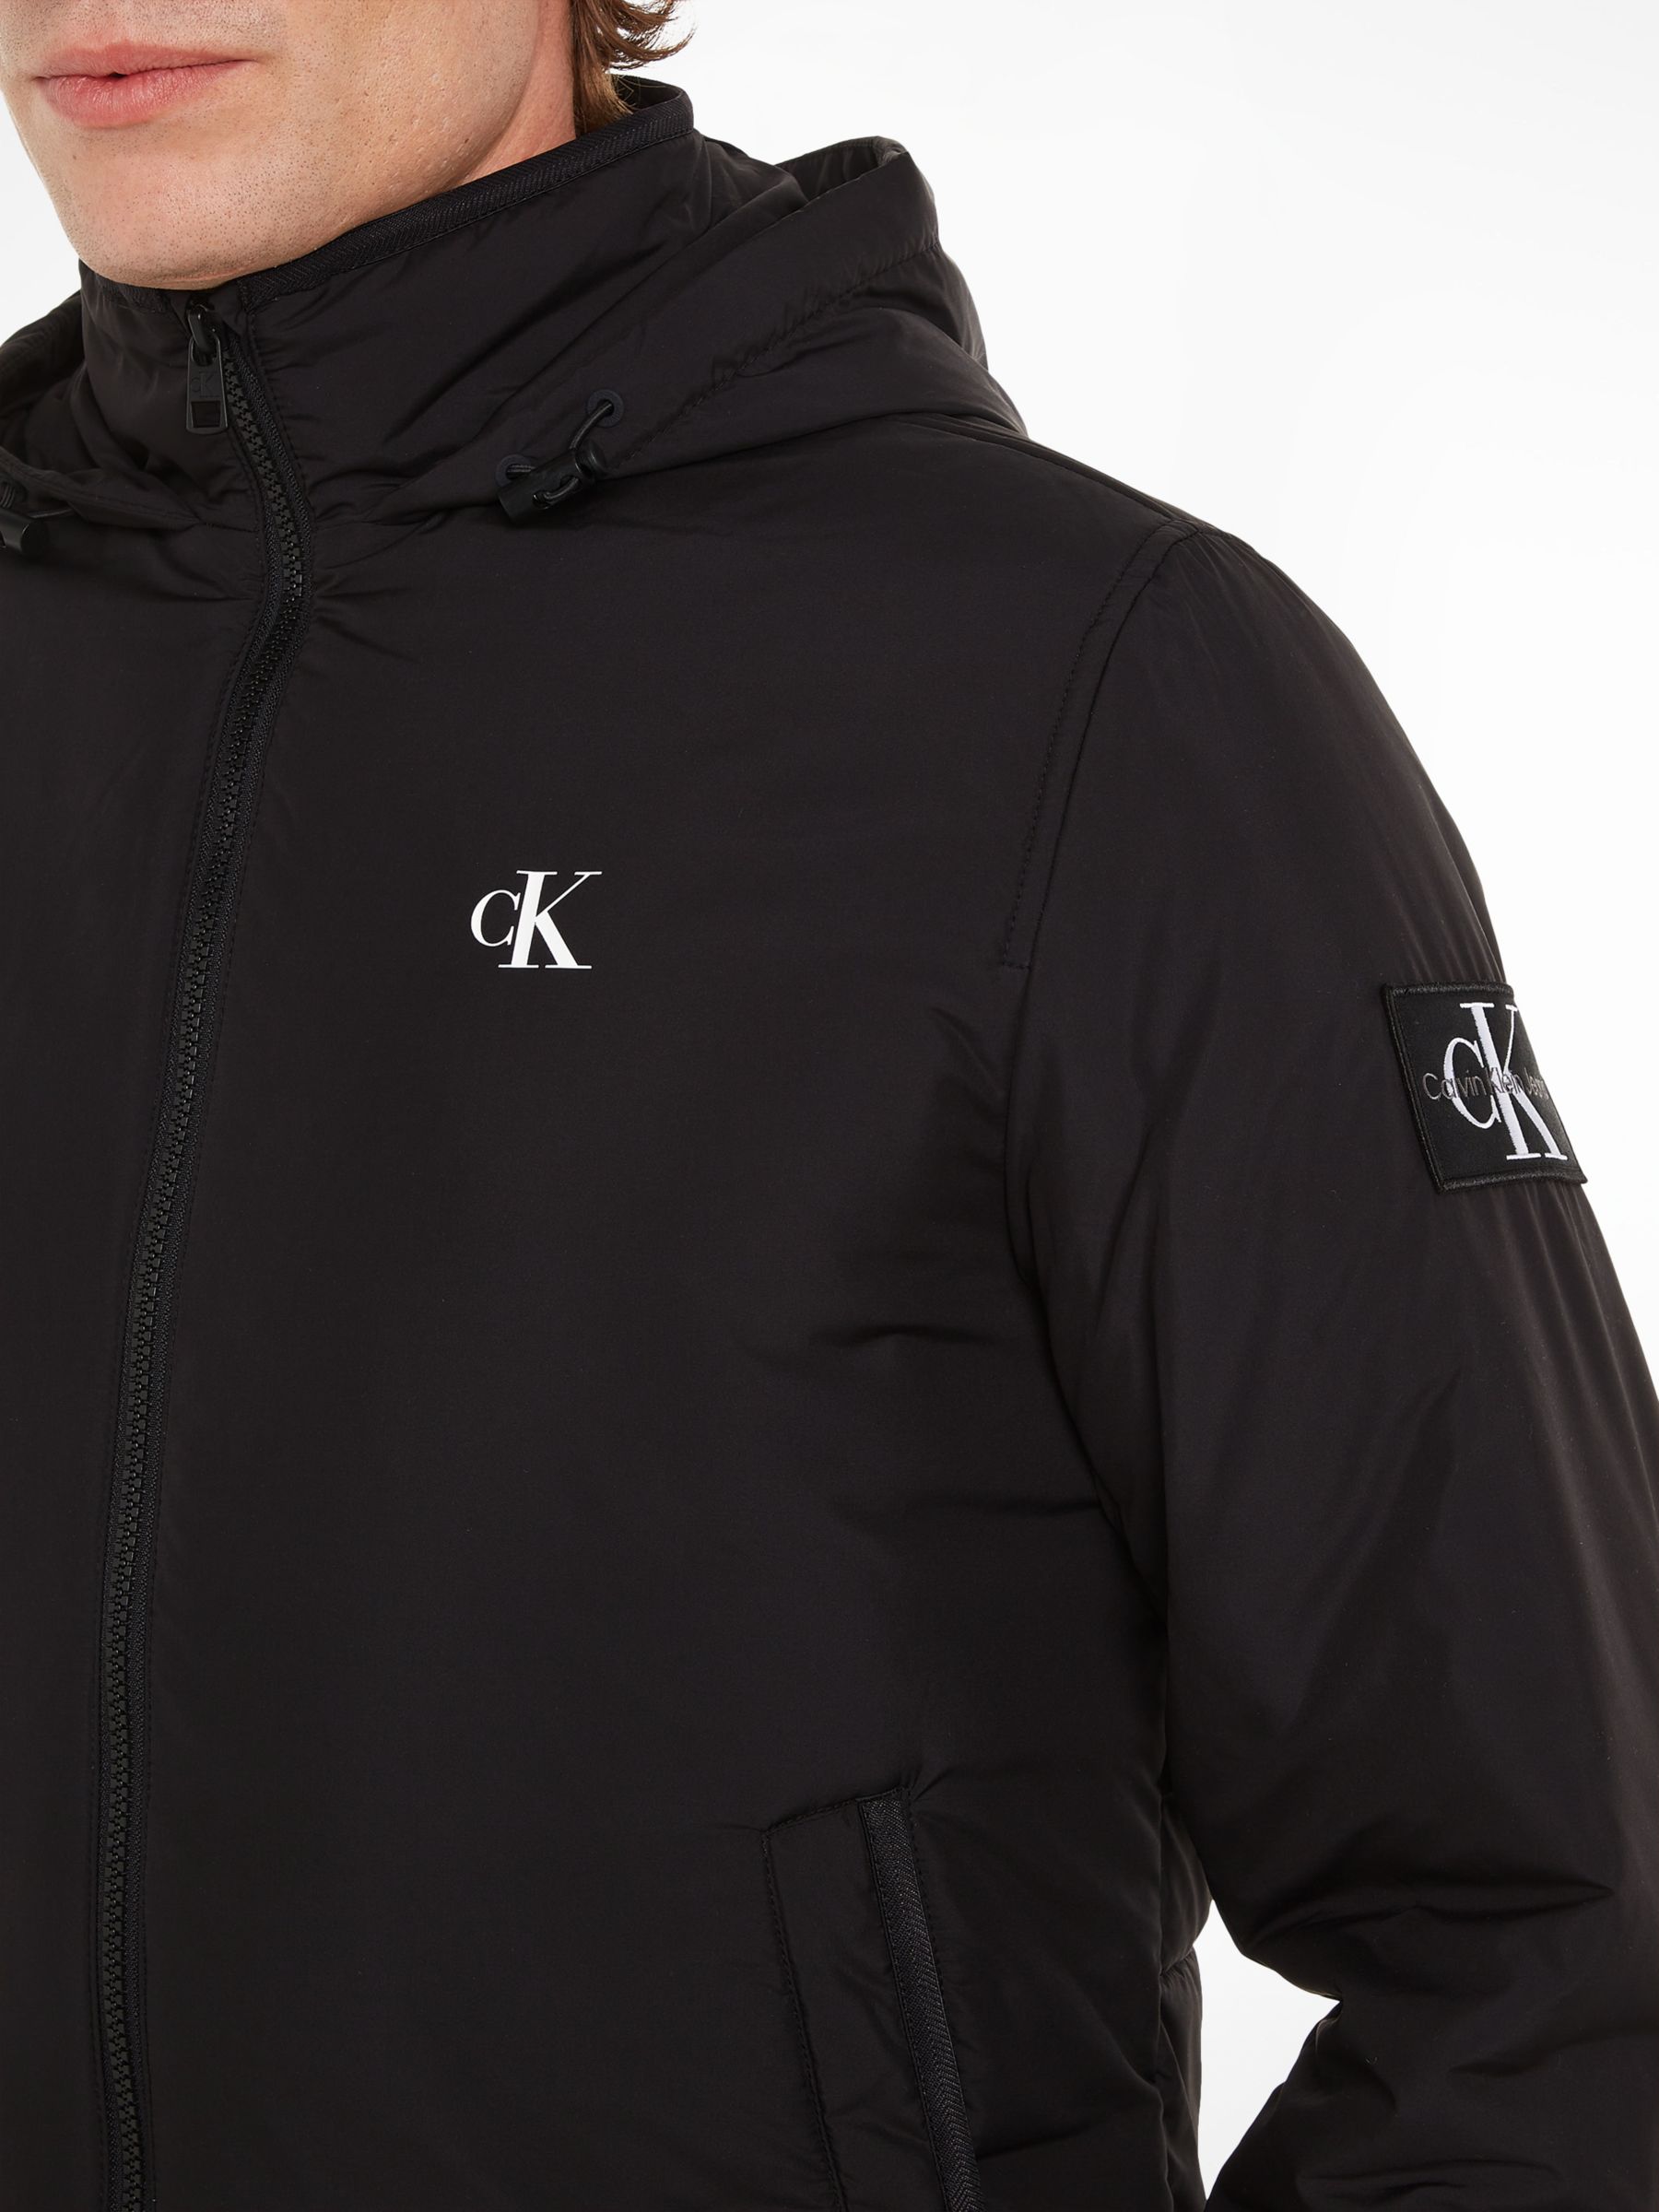 Calvin Klein Jeans Harrington Jacket, Ck Black at John Lewis & Partners